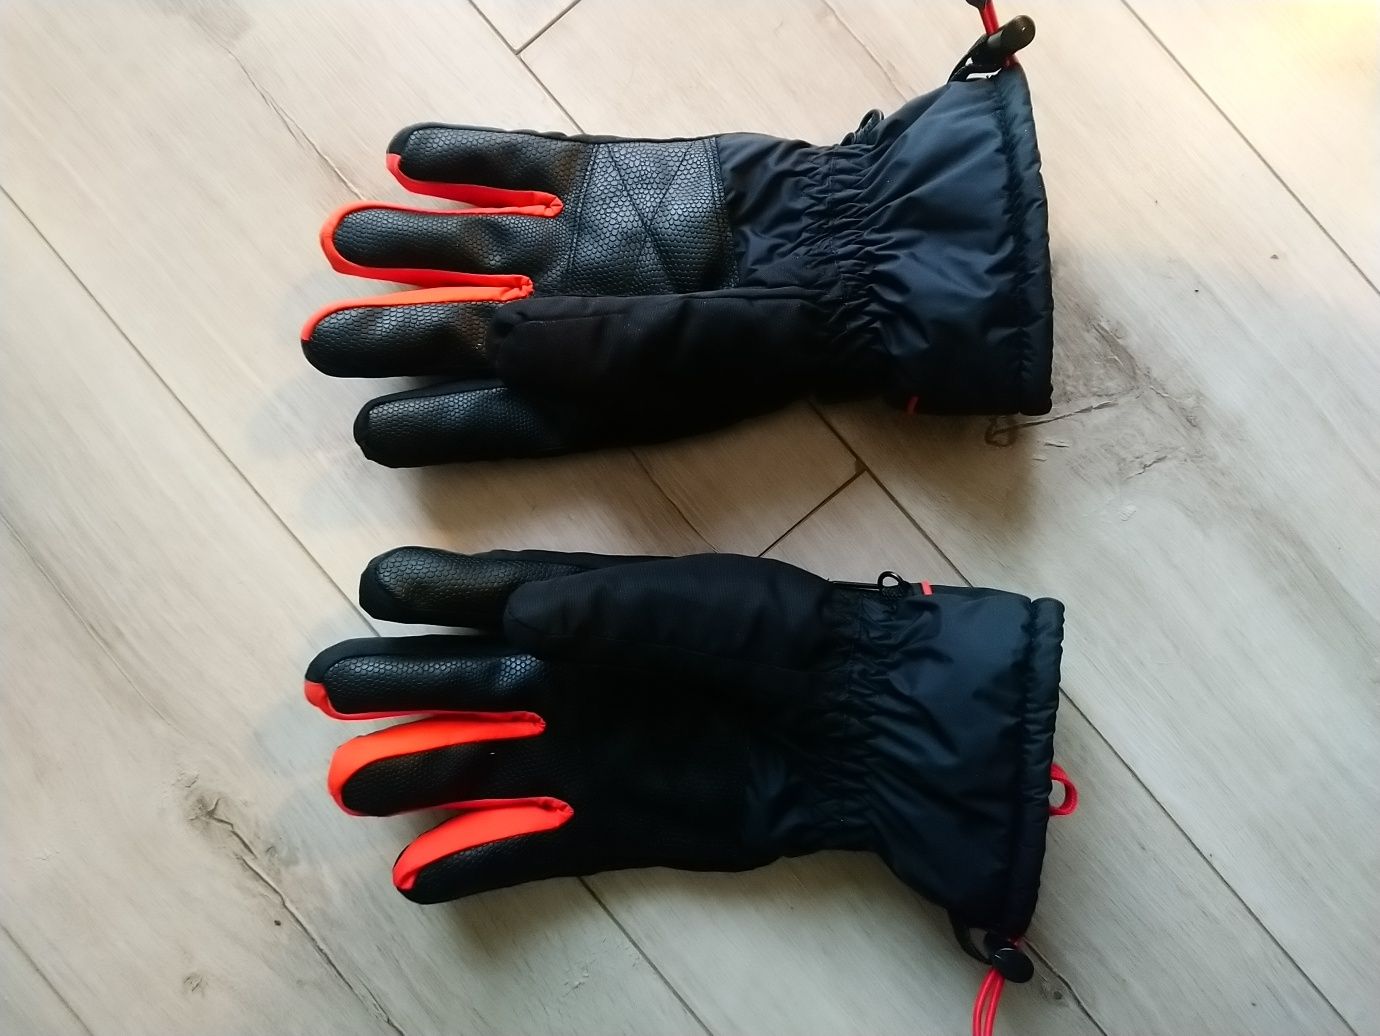 Rękawice narciarskie Viking 7 M/L